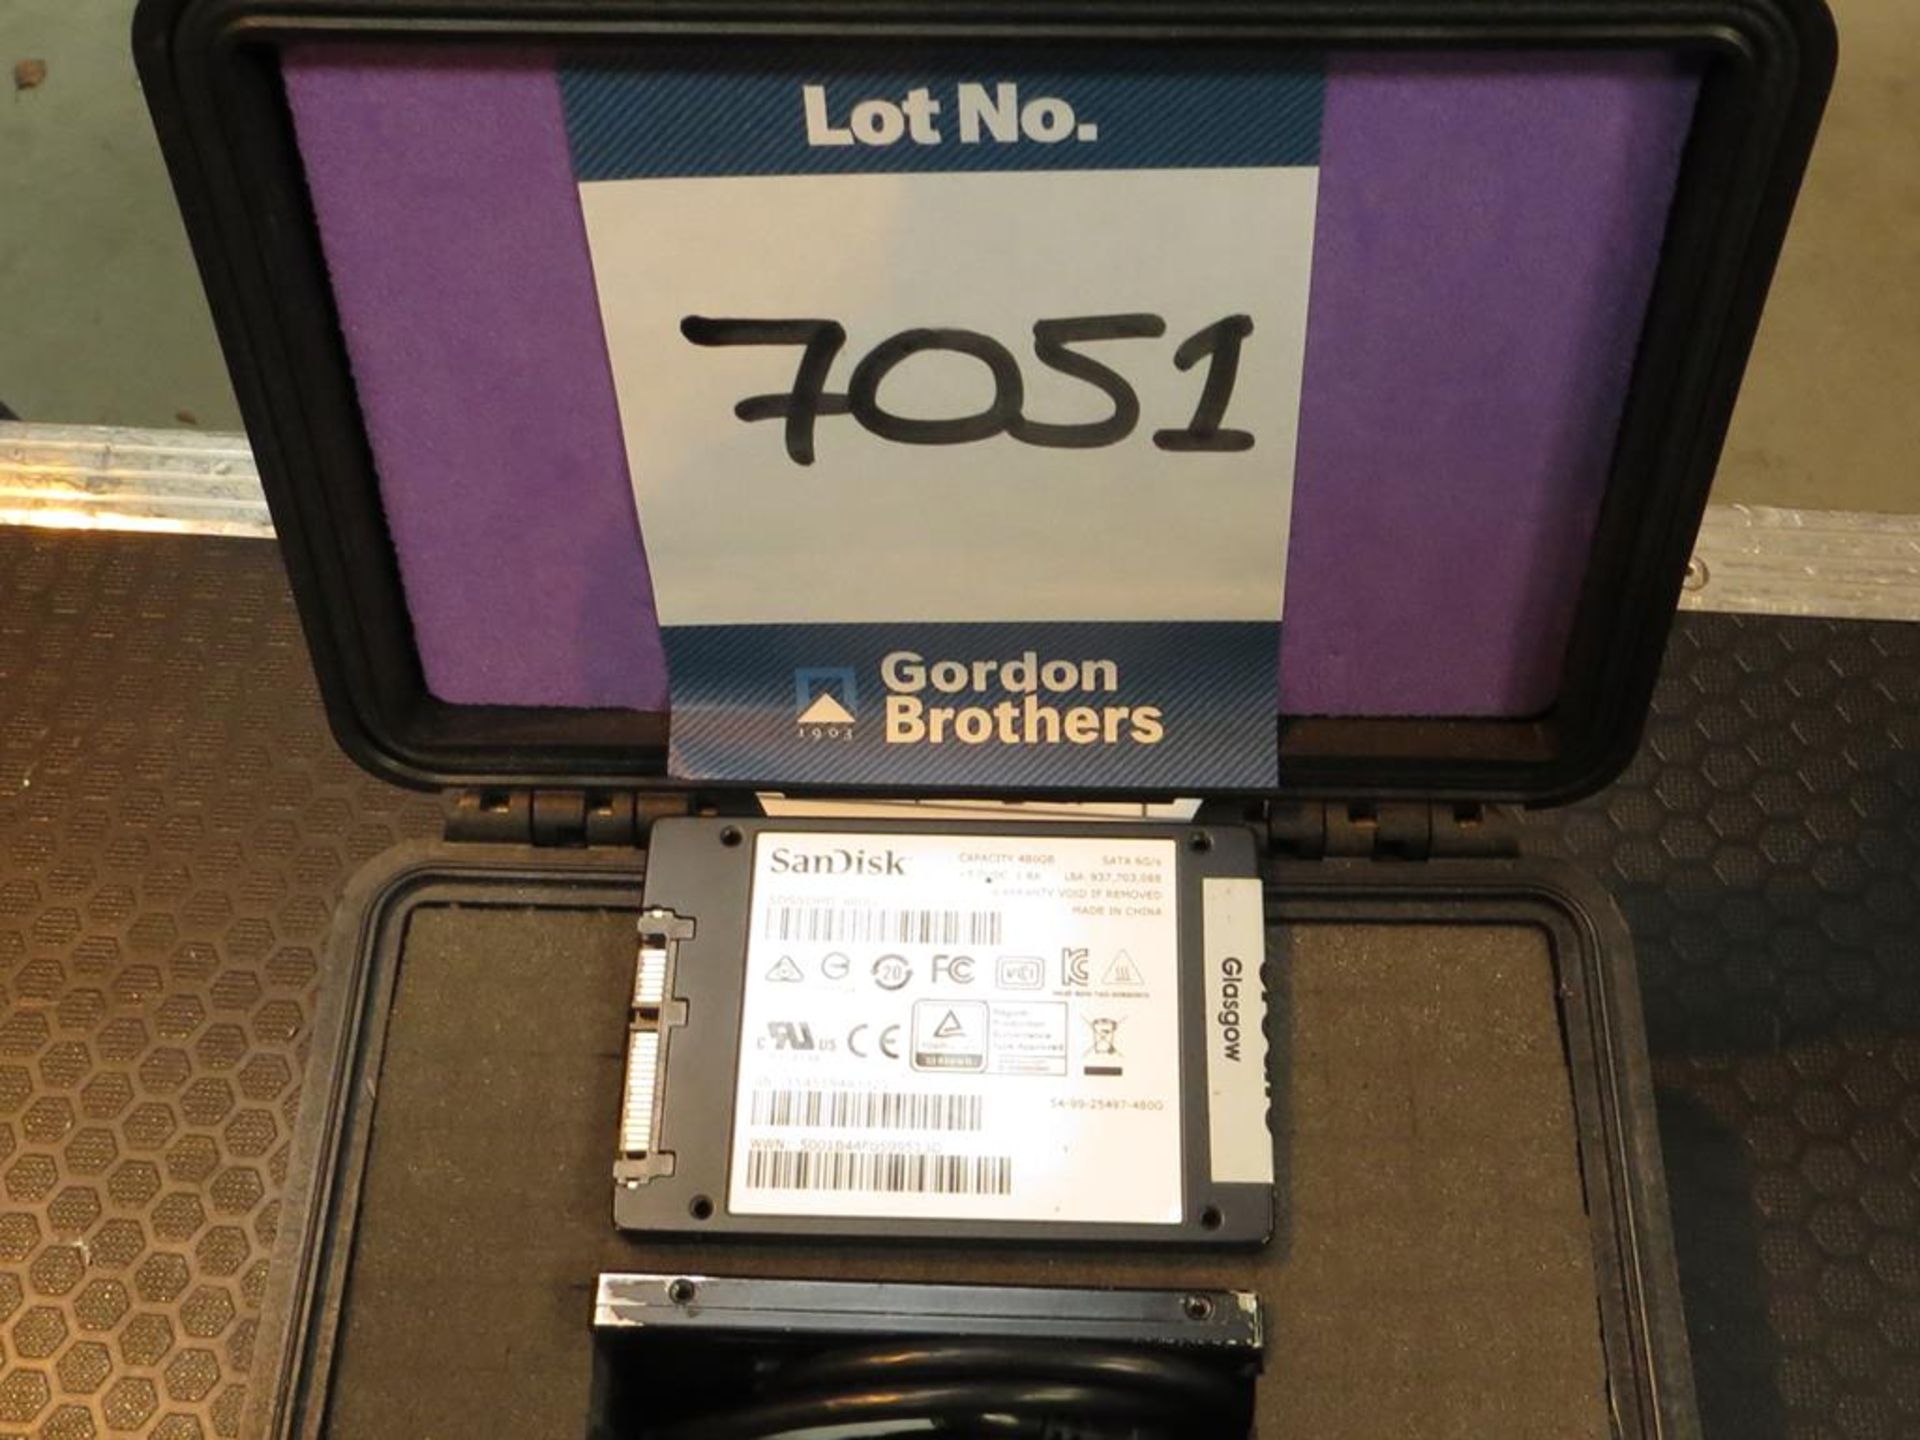 2x No. Sandisk, 480gb SSD memory cards in transit case: Unit C Moorside, 40 Dava Street, Glasgow G51 - Image 2 of 3